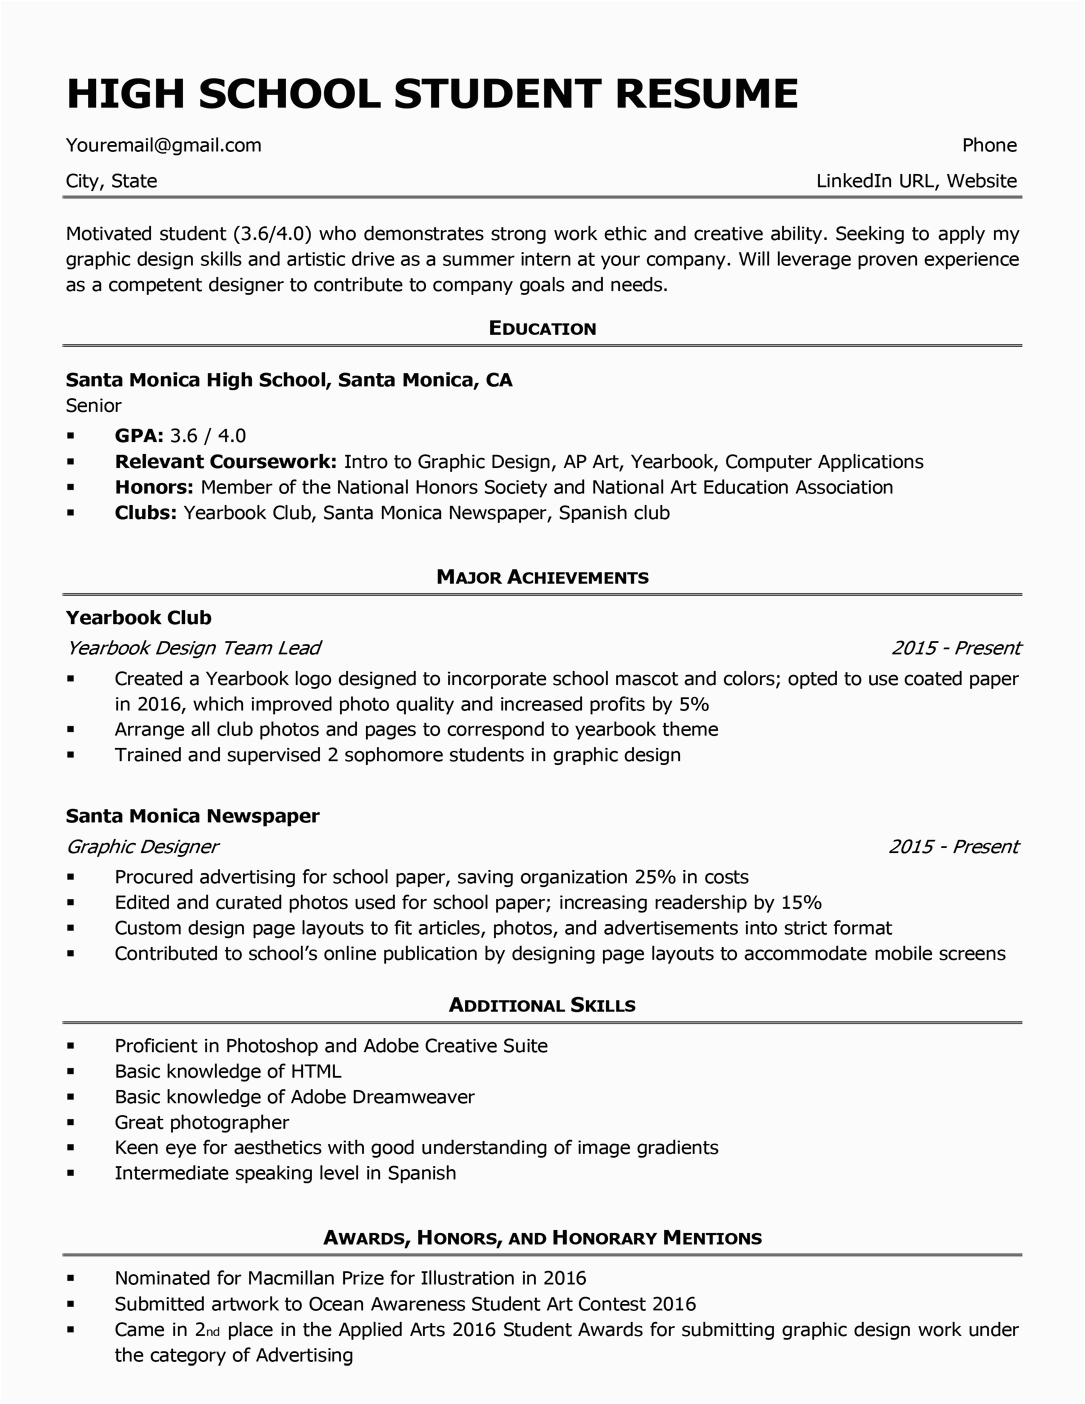 beginner college student resume format for internship